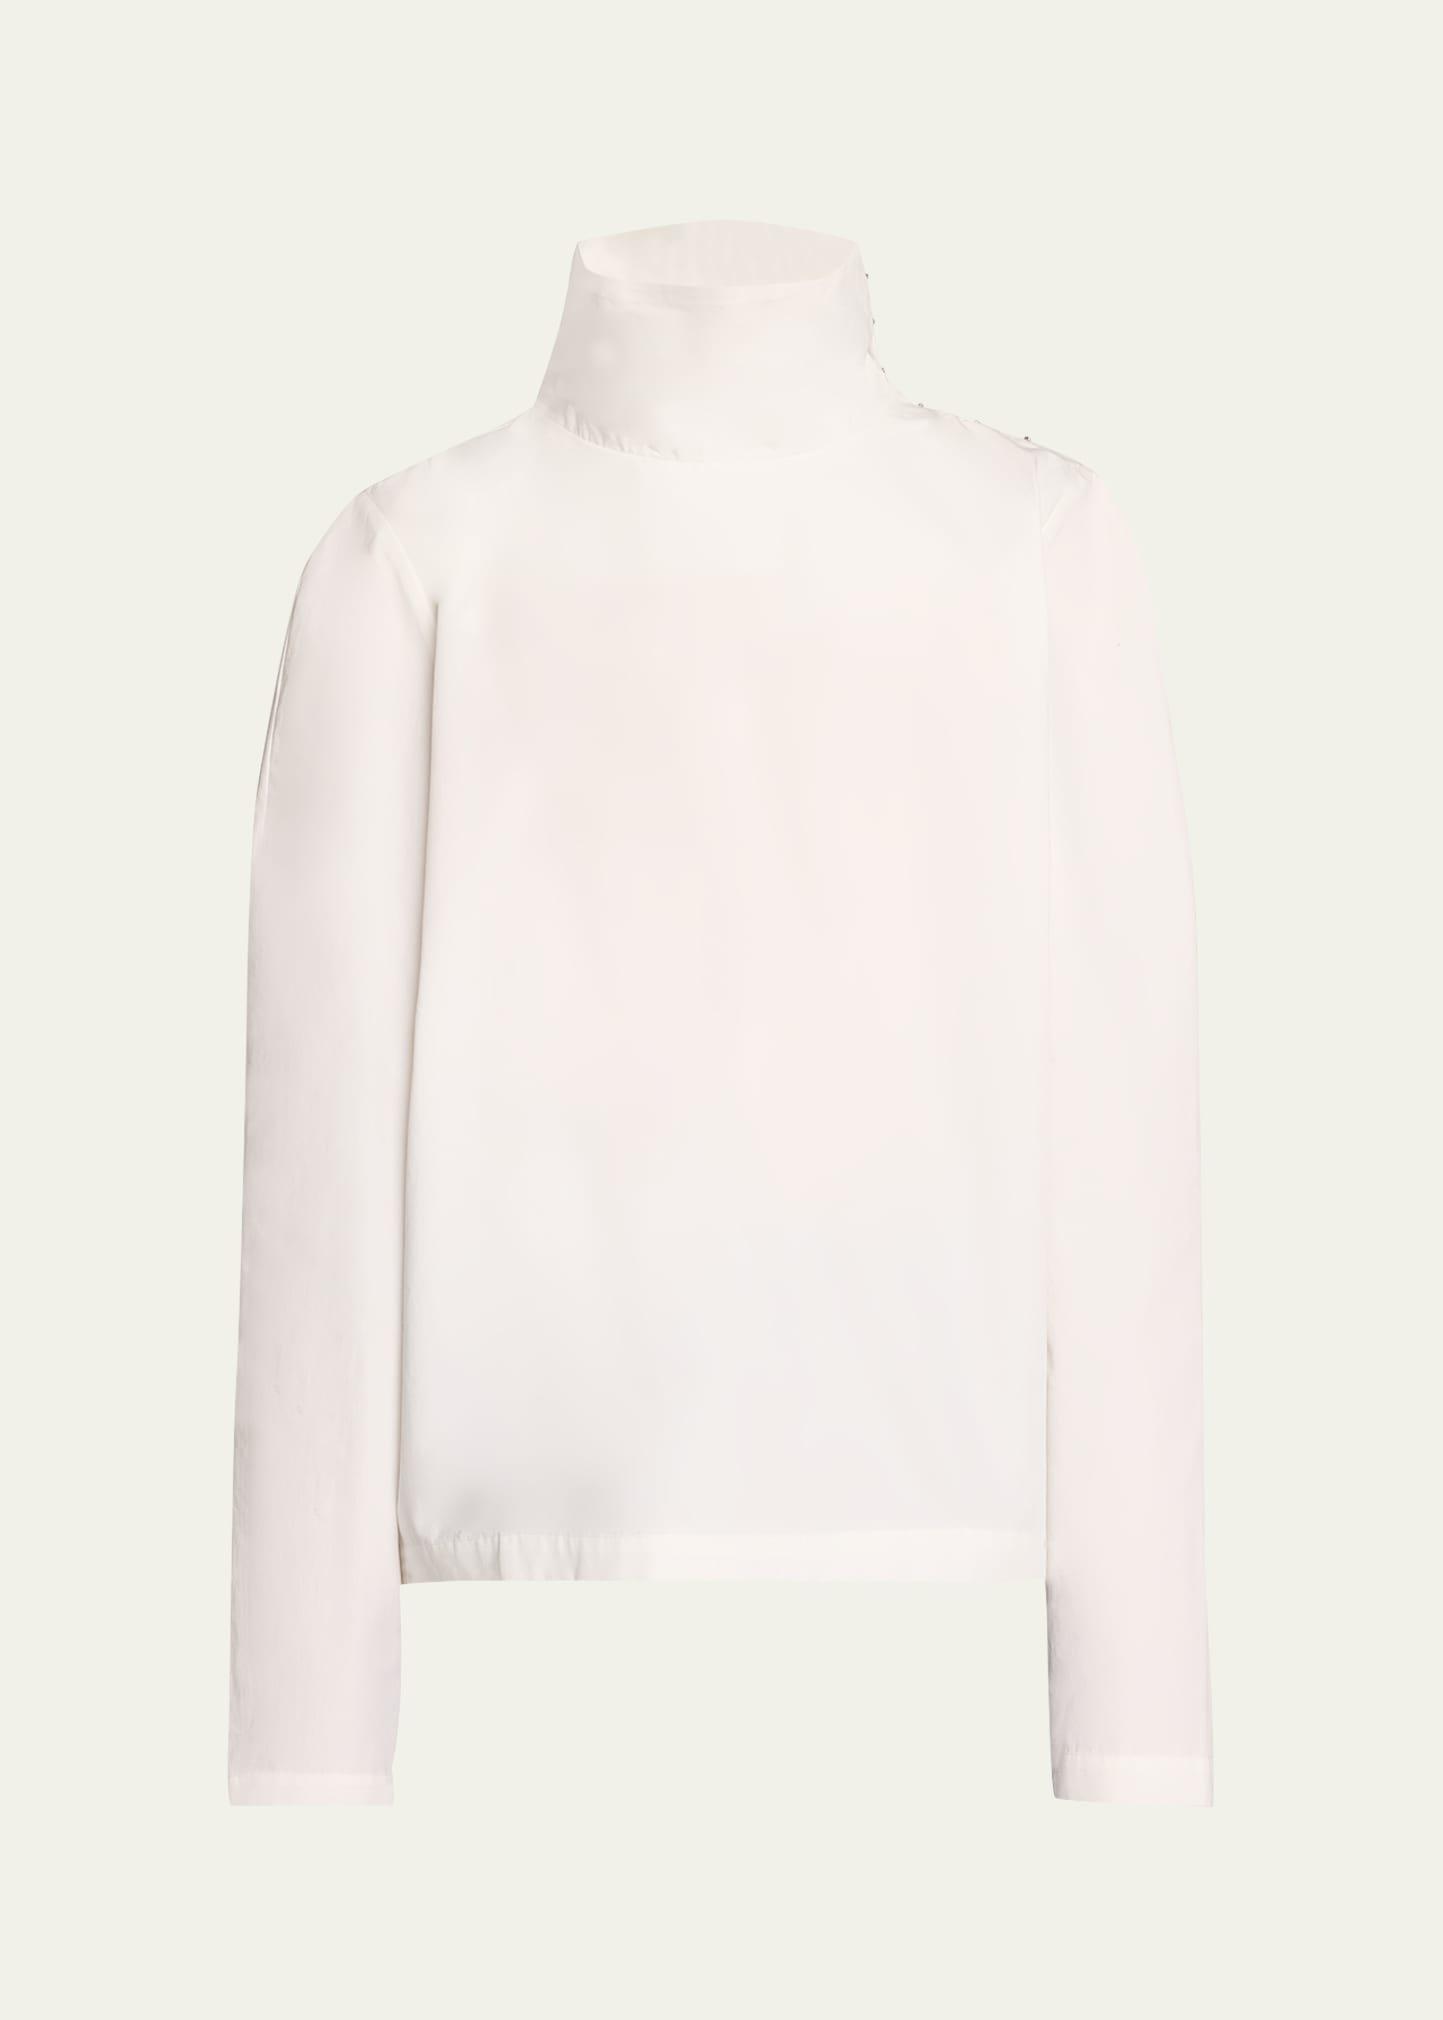 Bianca Saunders Men's Poplin Mock-neck Shirt In White